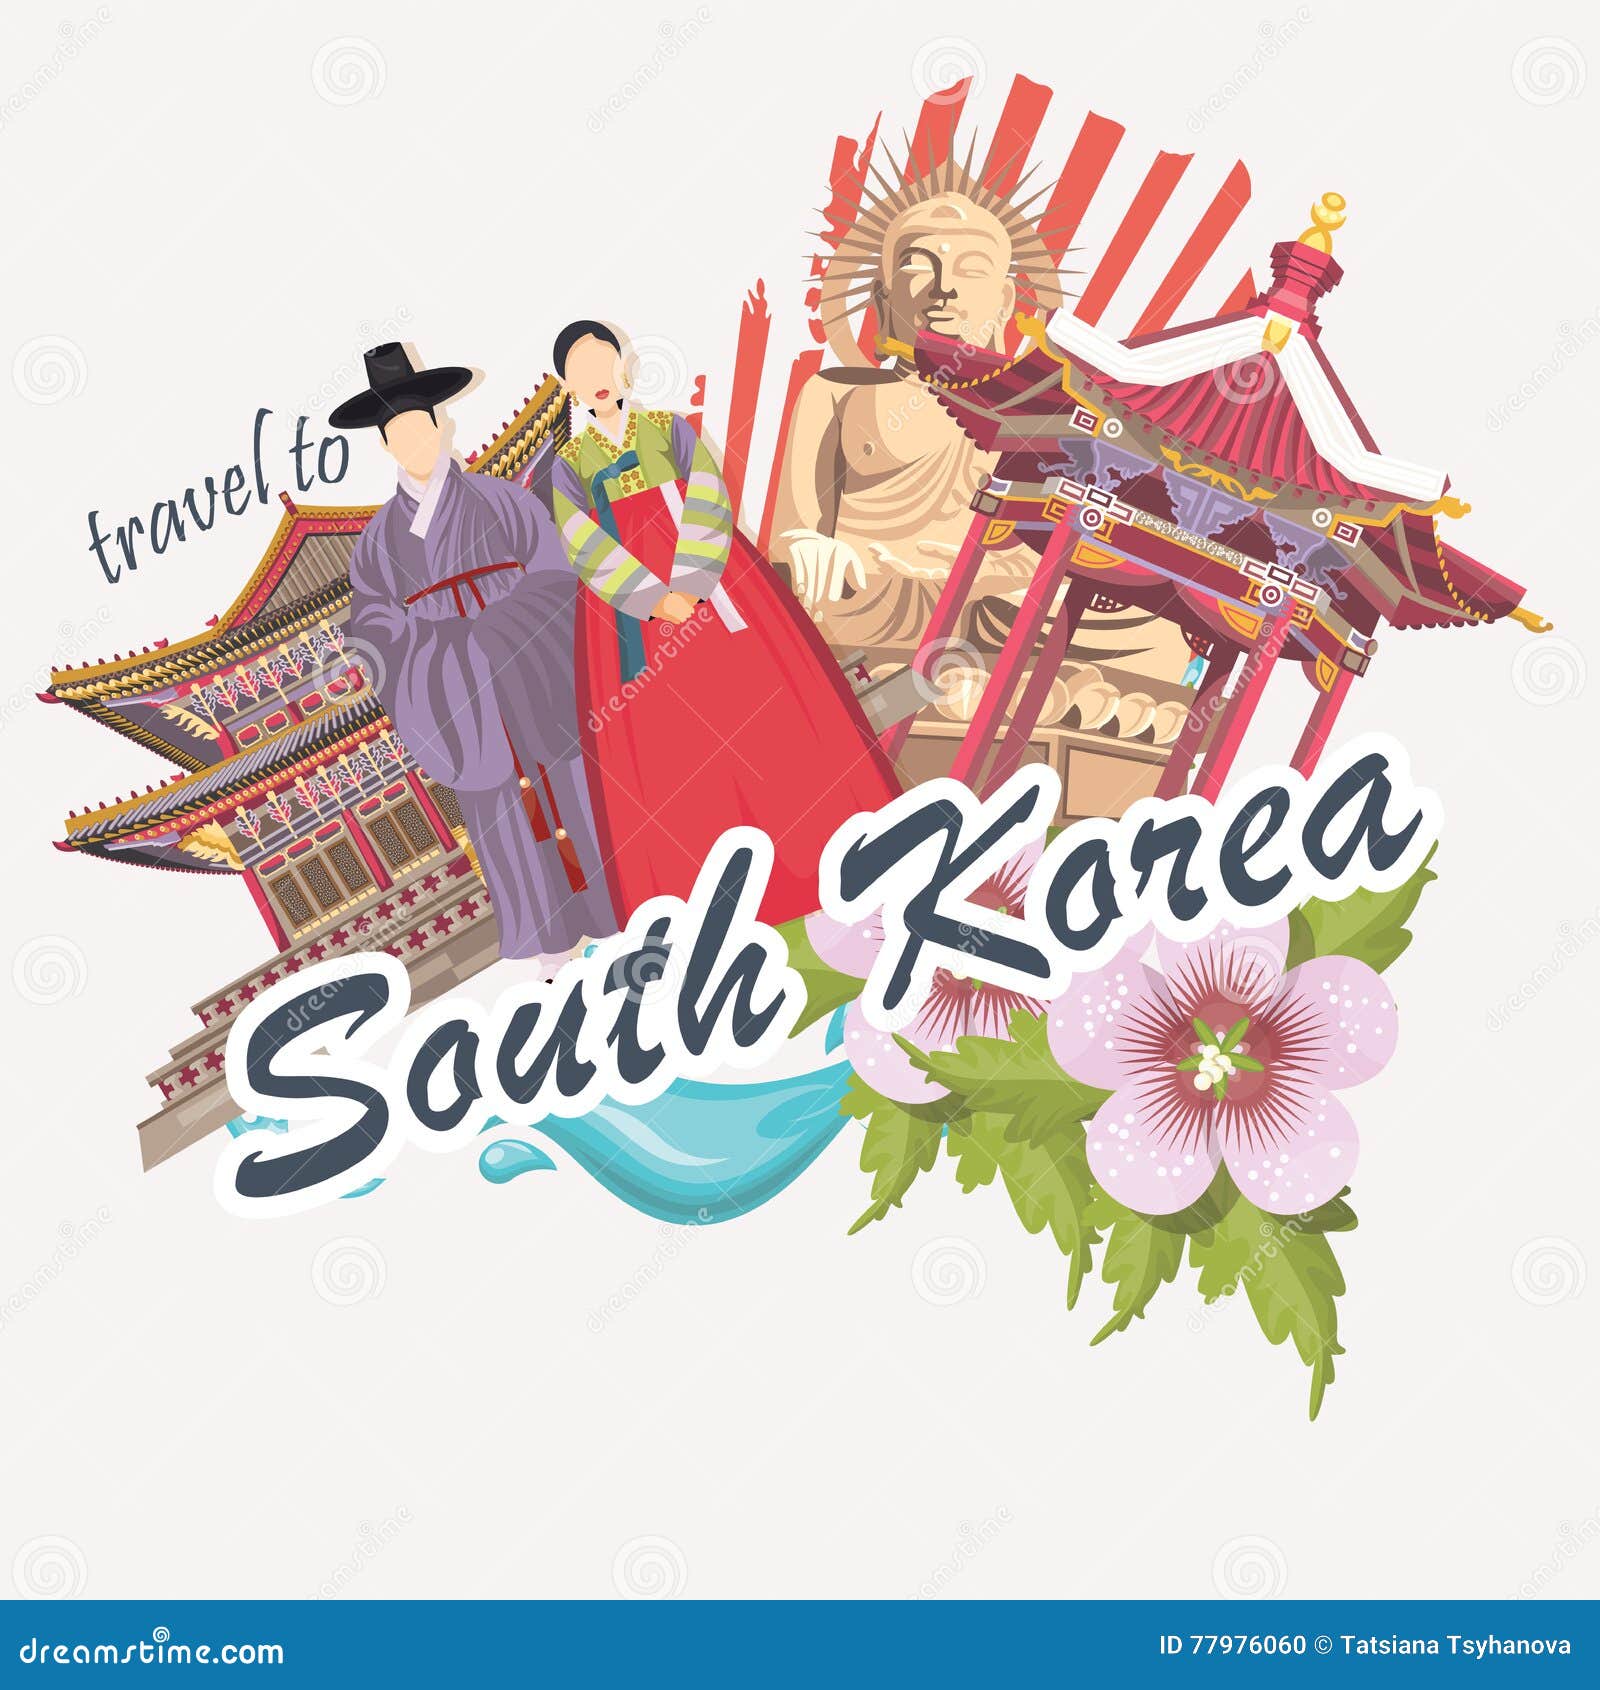 south korea travel guide video